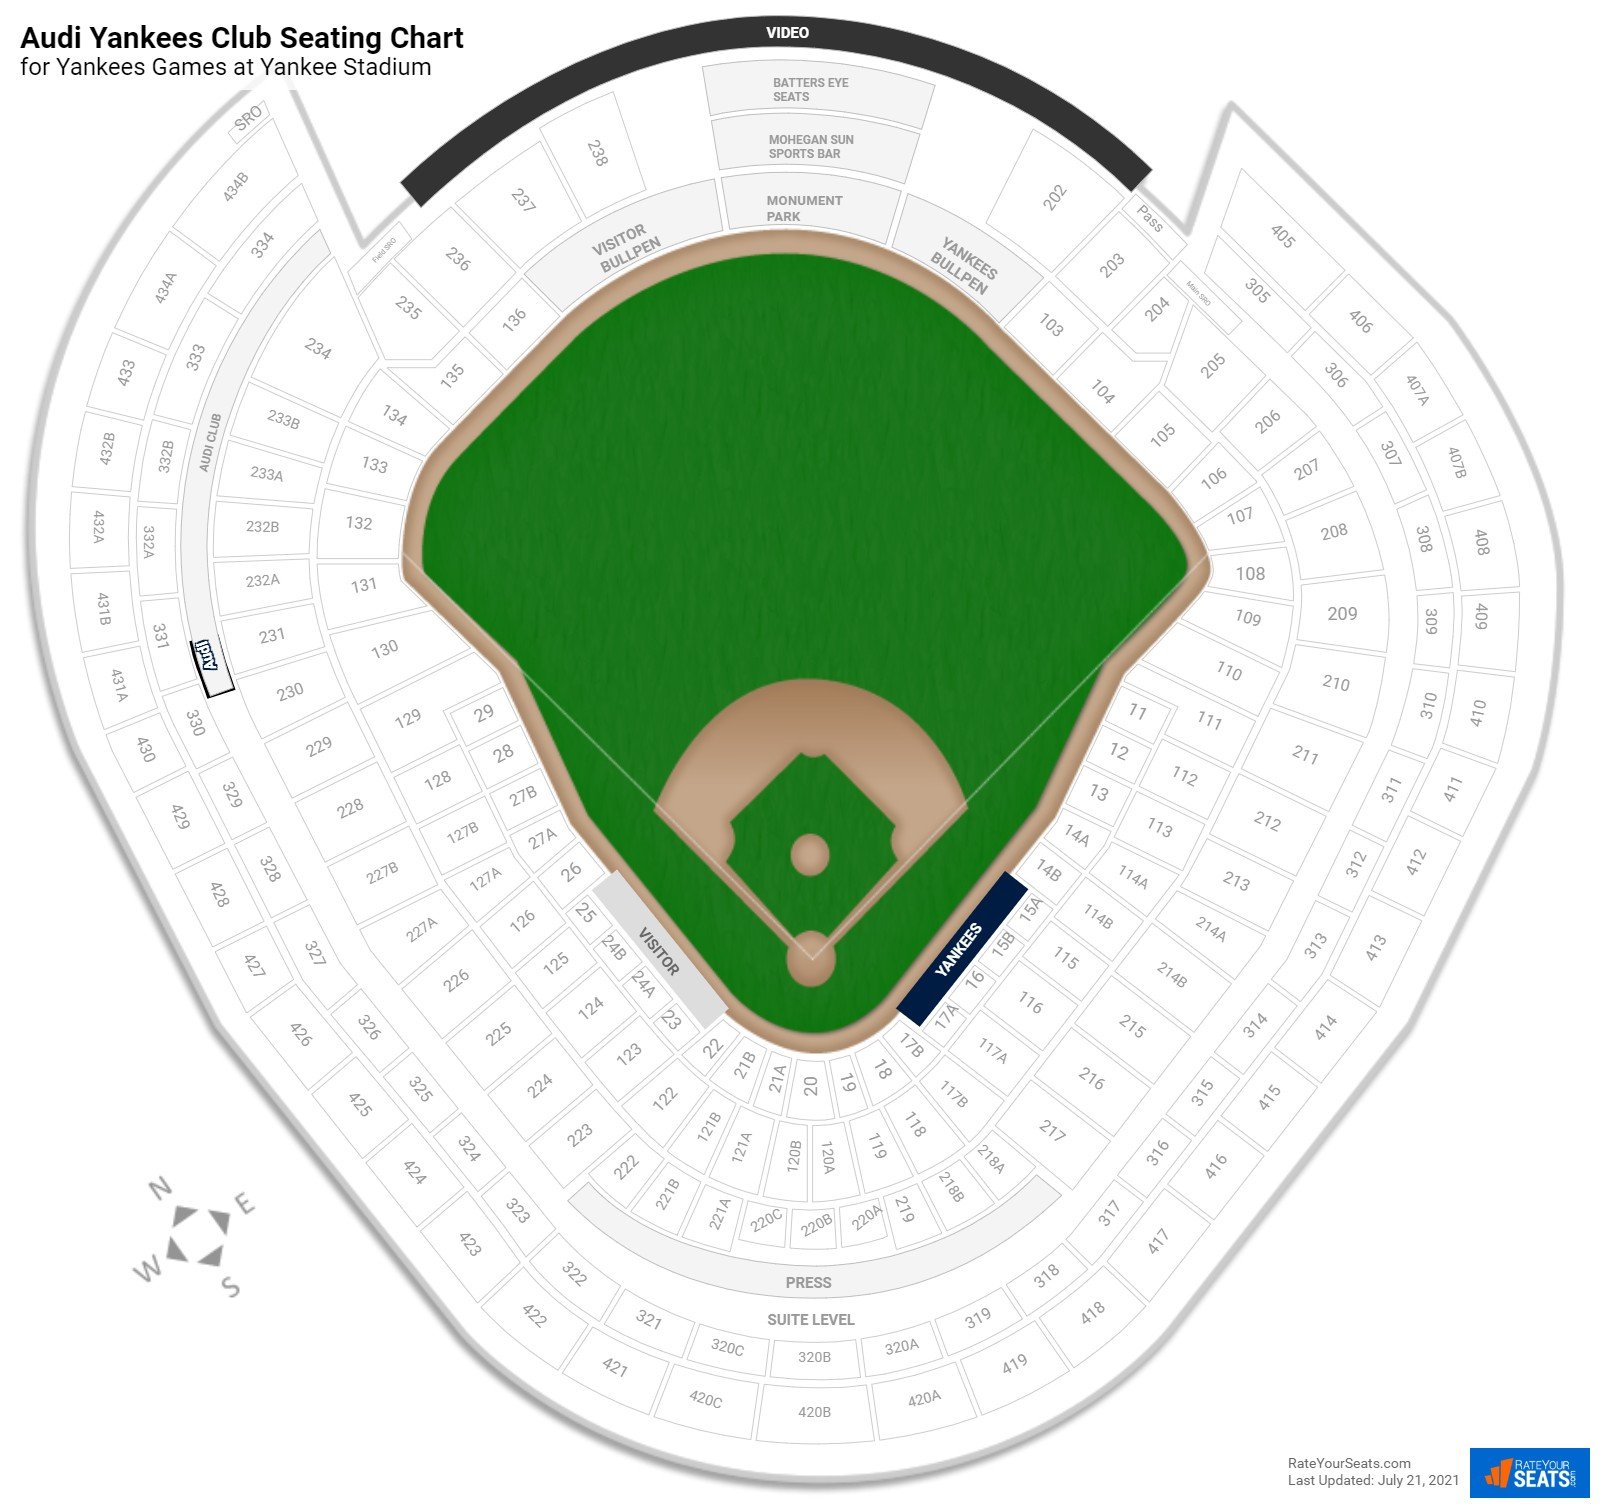 Yankees Audi Yankees Club Seating Chart at Yankee Stadium